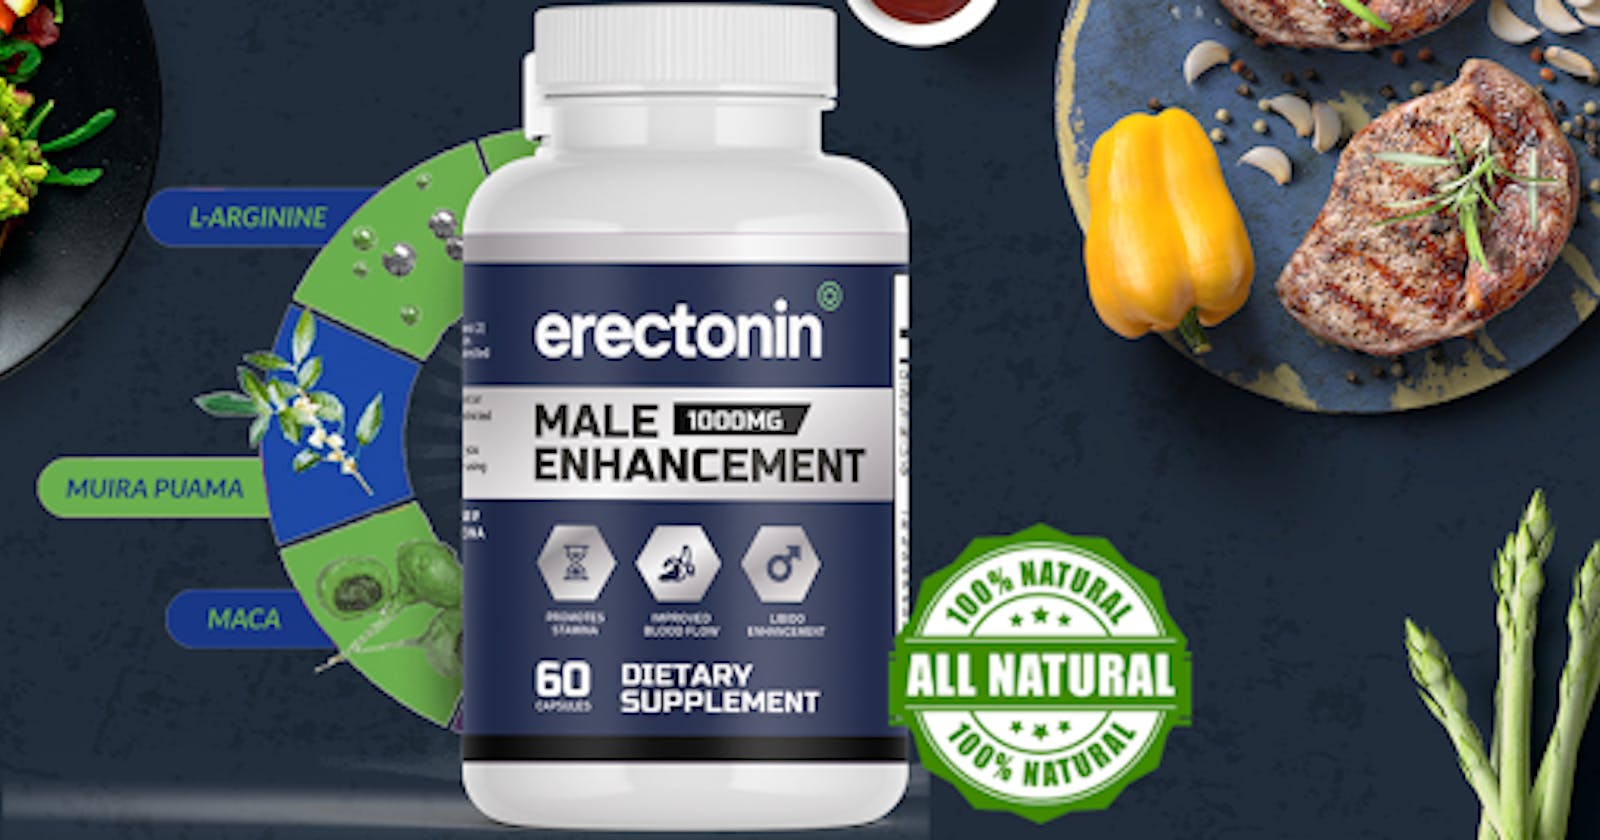 Erectonin Male Enhancement Reviews - New Male Enhancement | Free Trial Offer